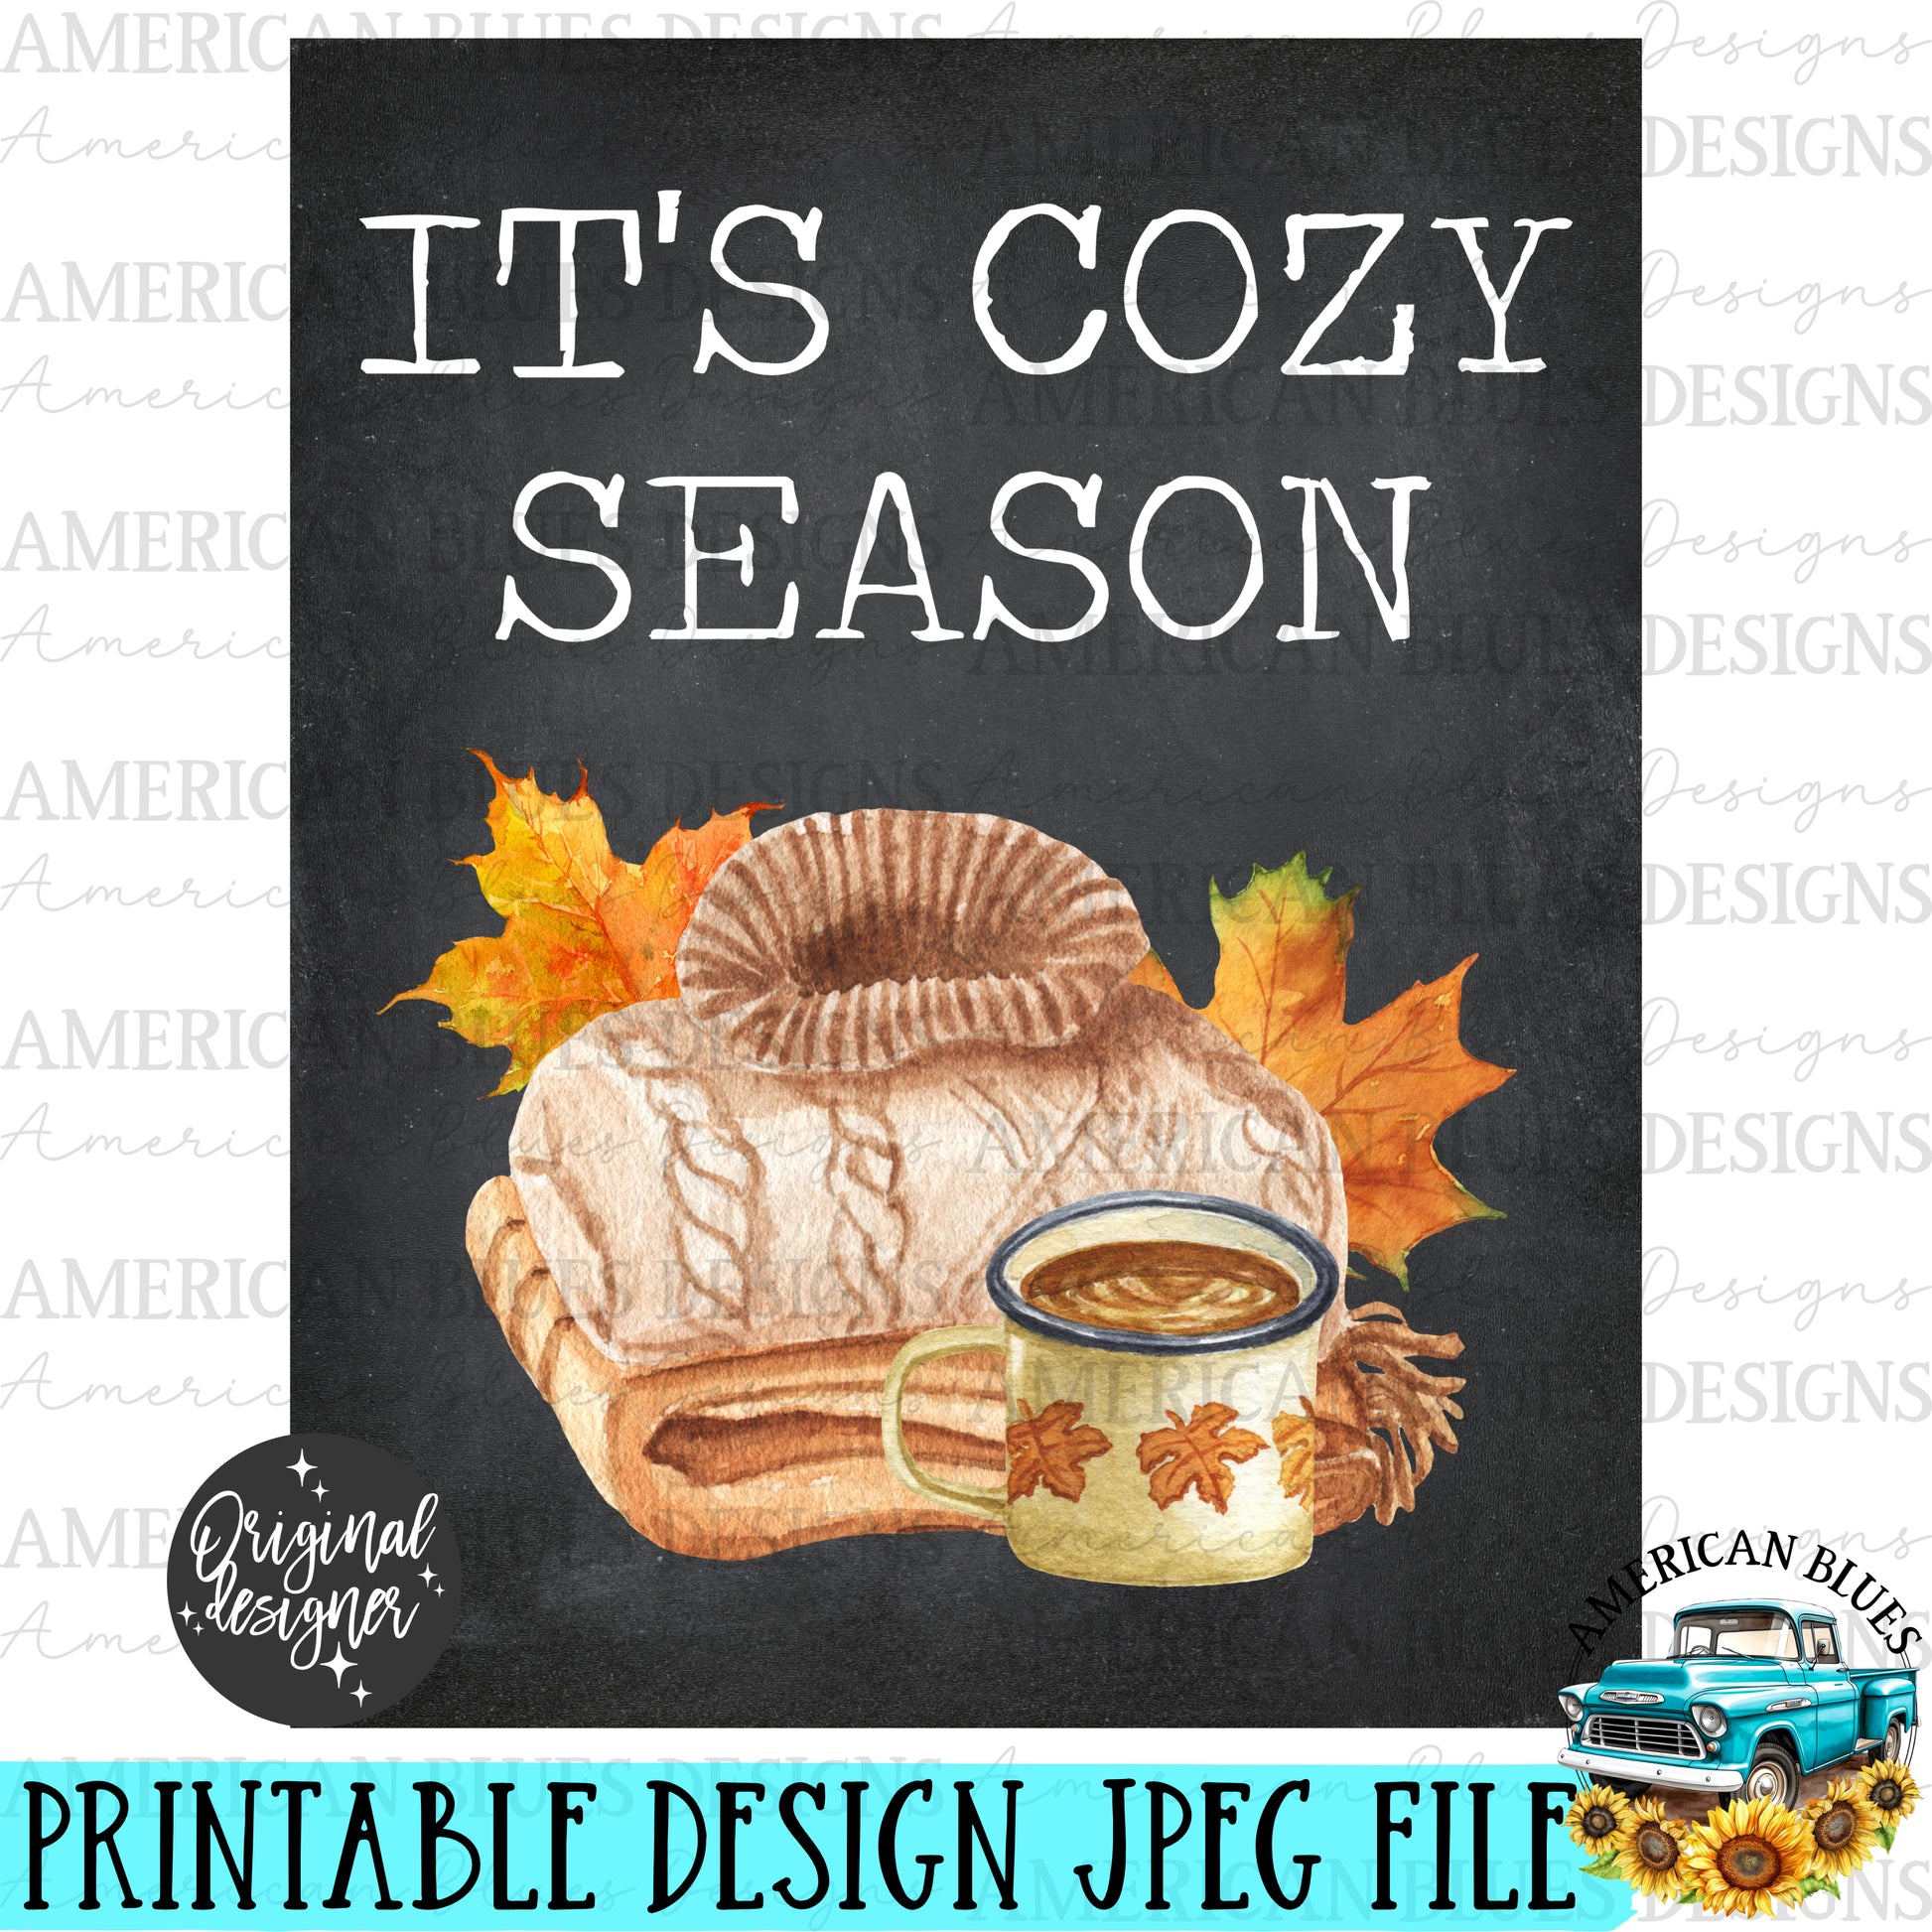 It's cozy season printable | American Blues Designs